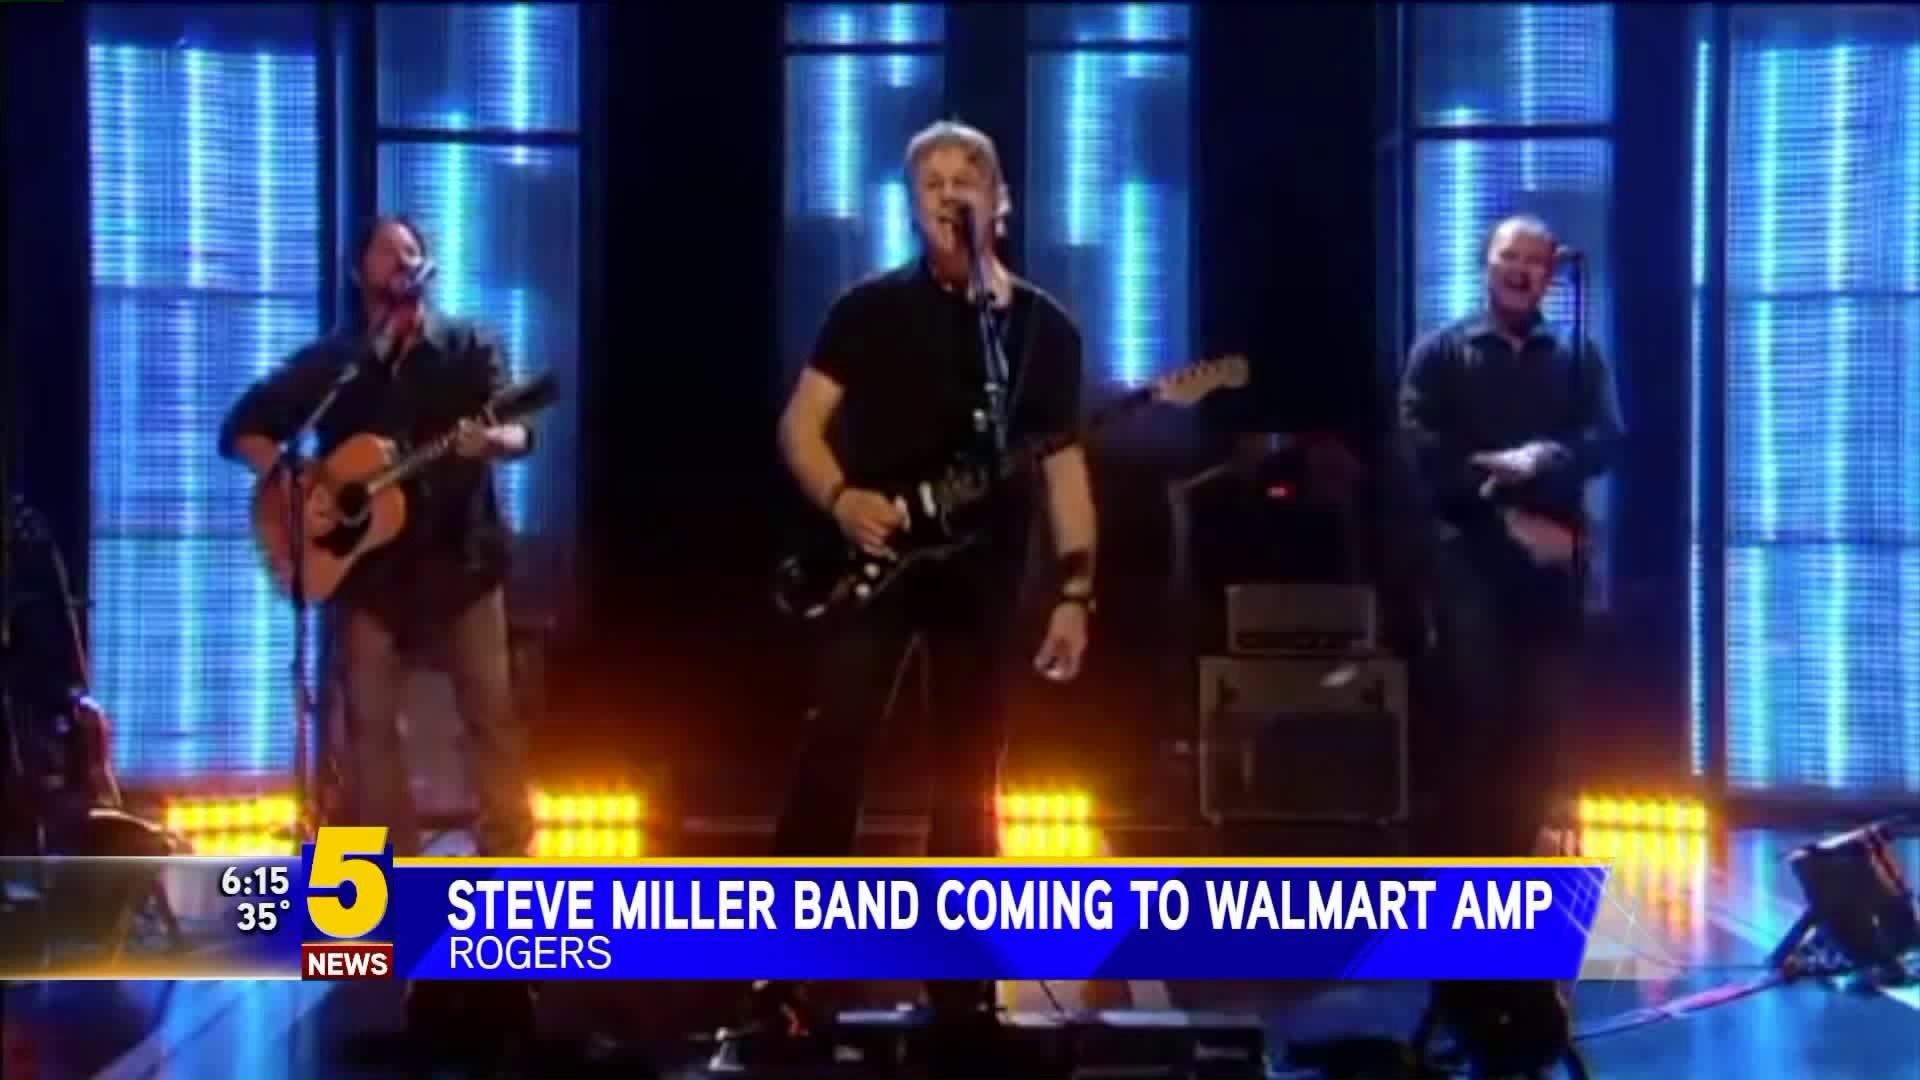 Steve Miller Band Coming To Walmart AMP